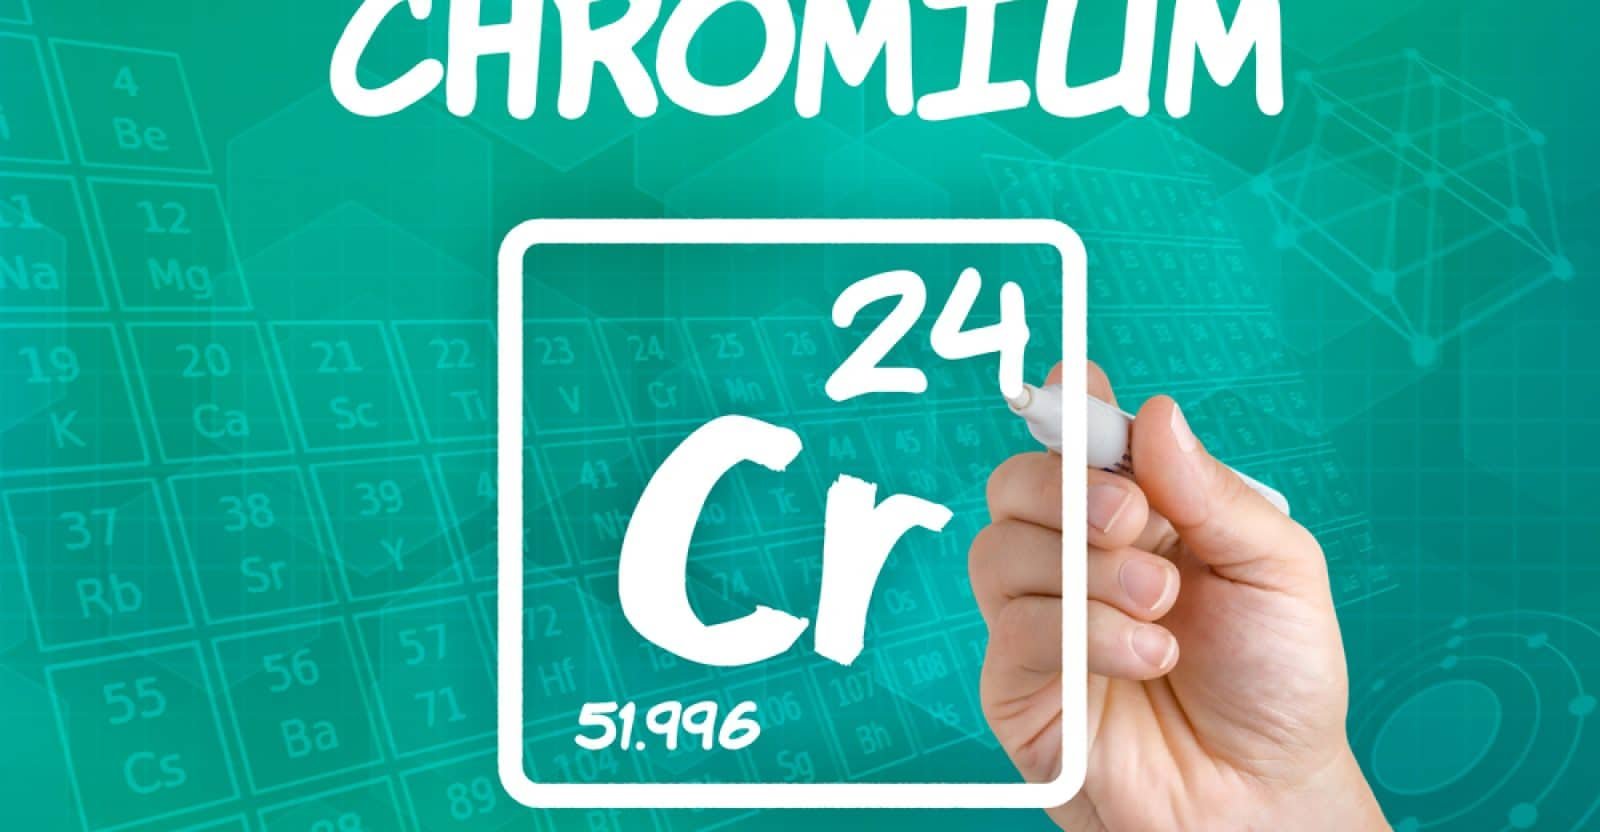 benefits of chromium gtf